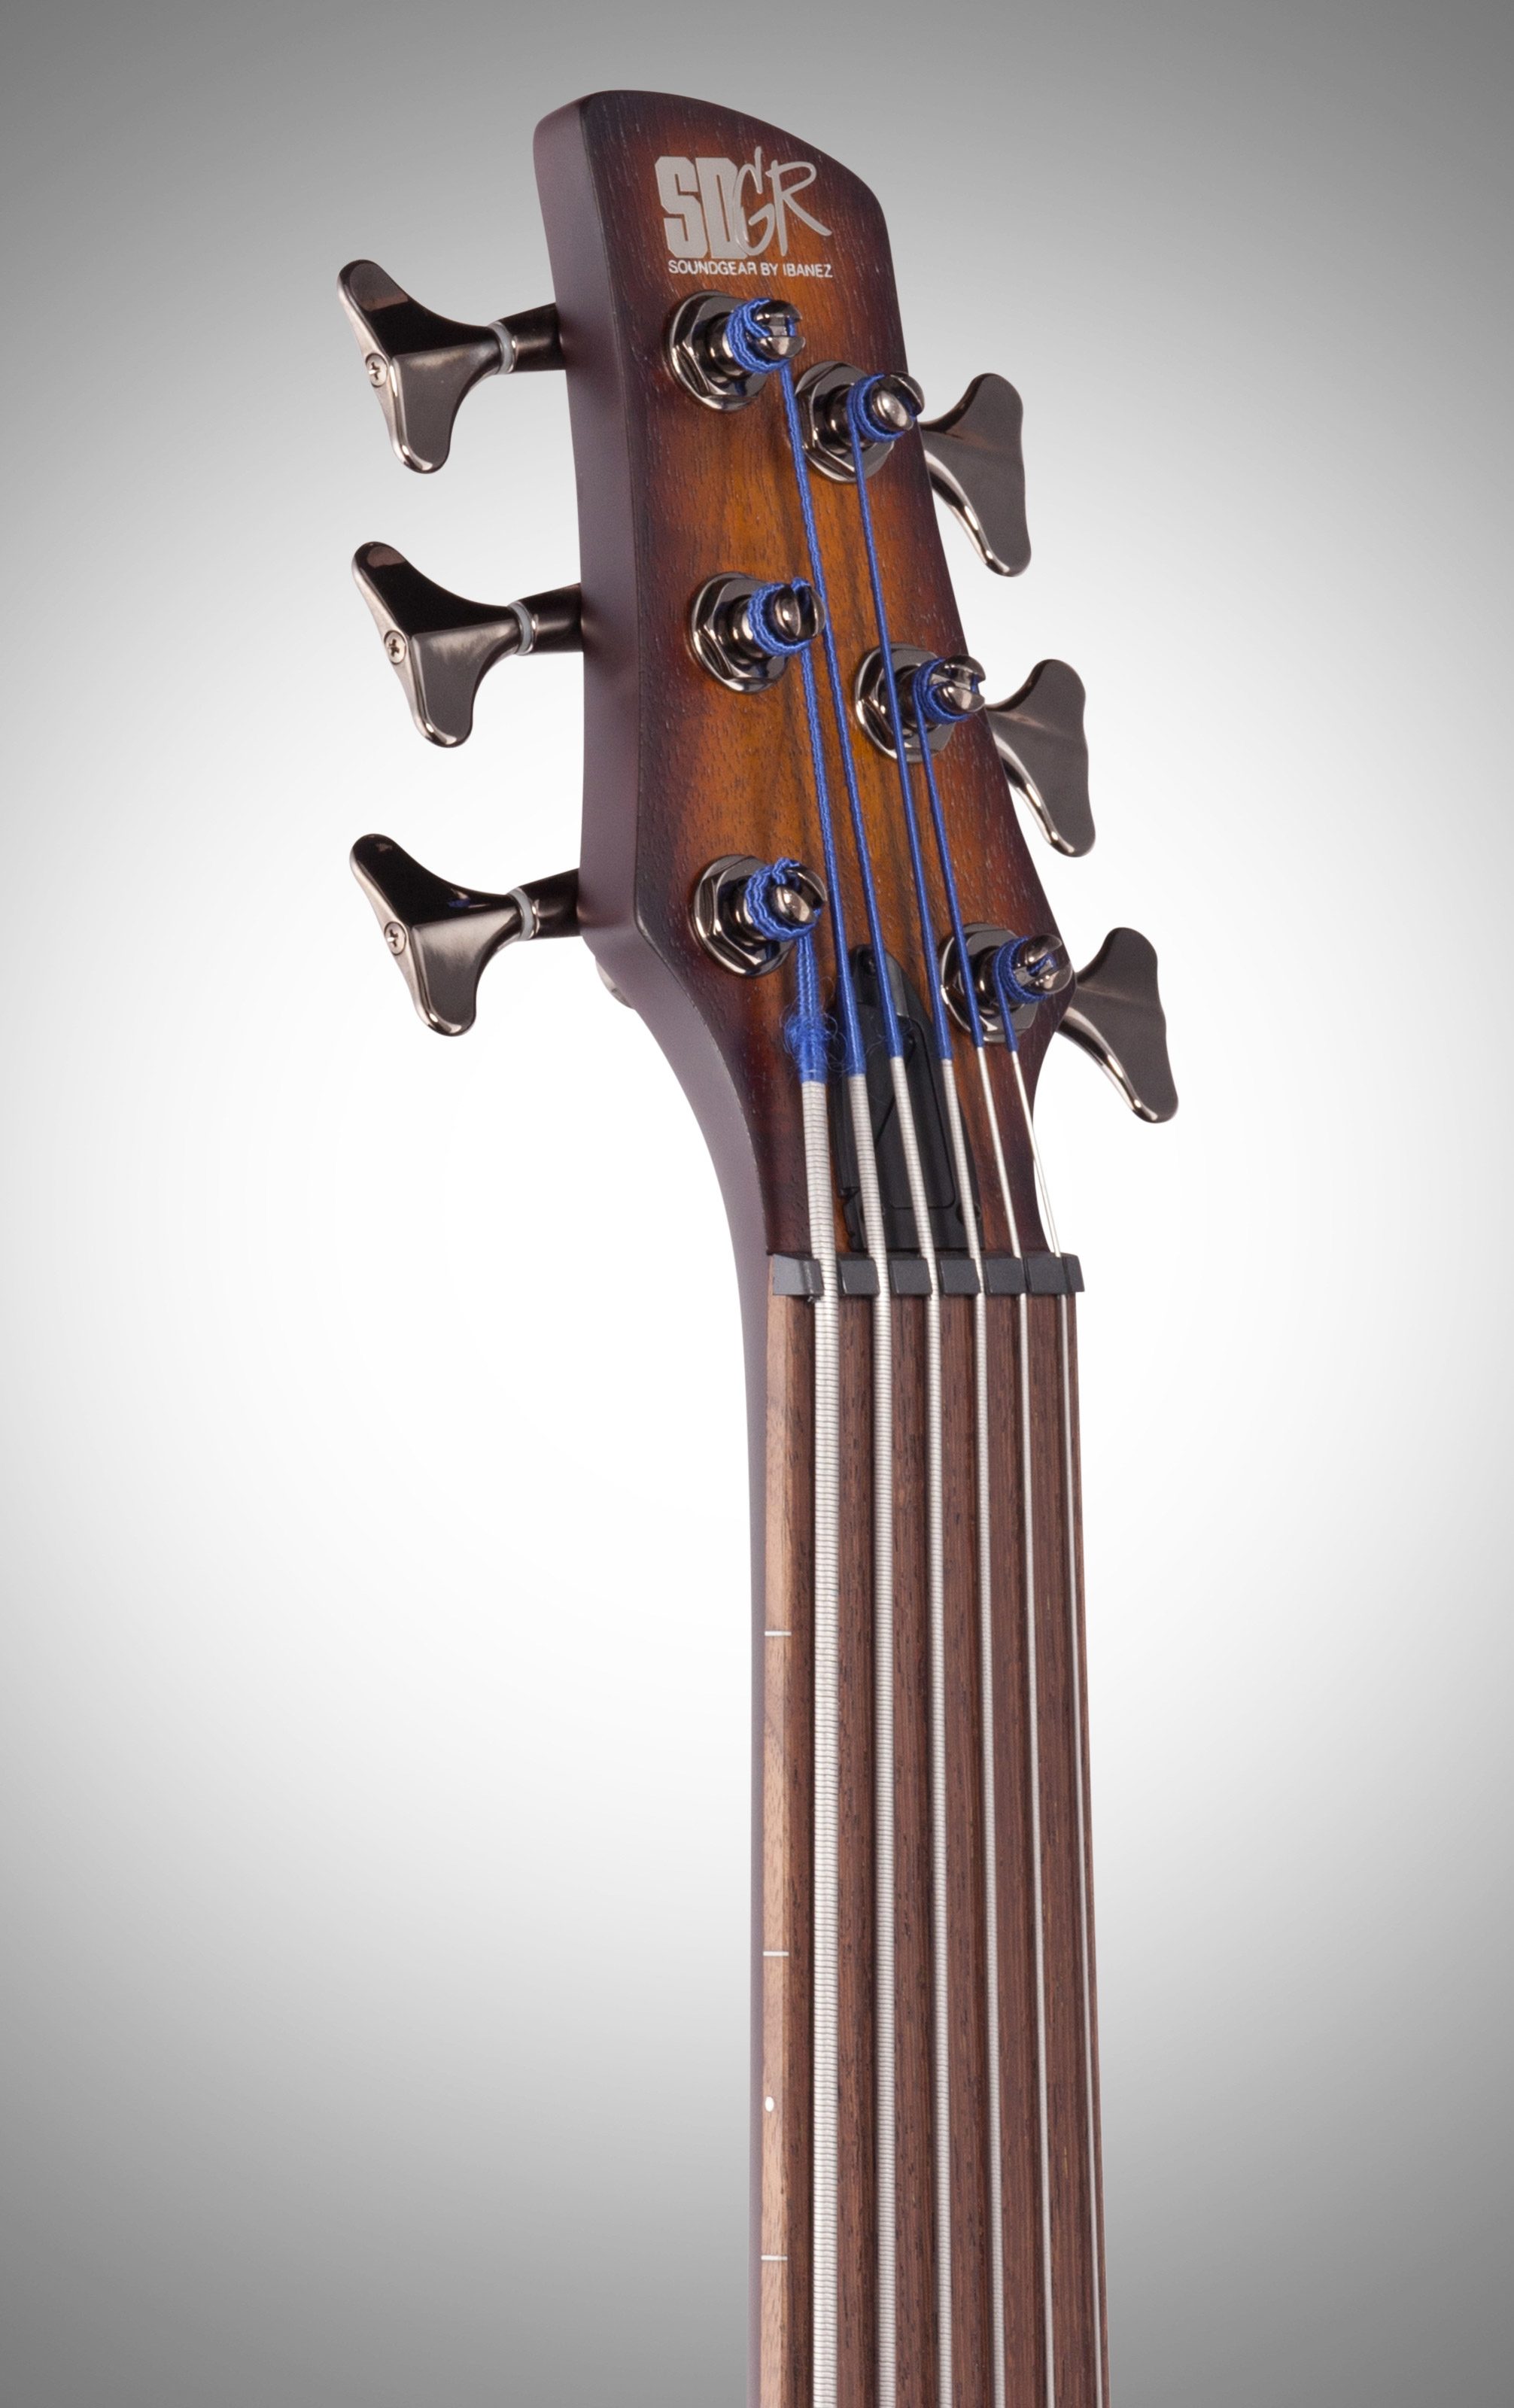 Ibanez Srf706 Portamento Fretless Electric Bass 6 String